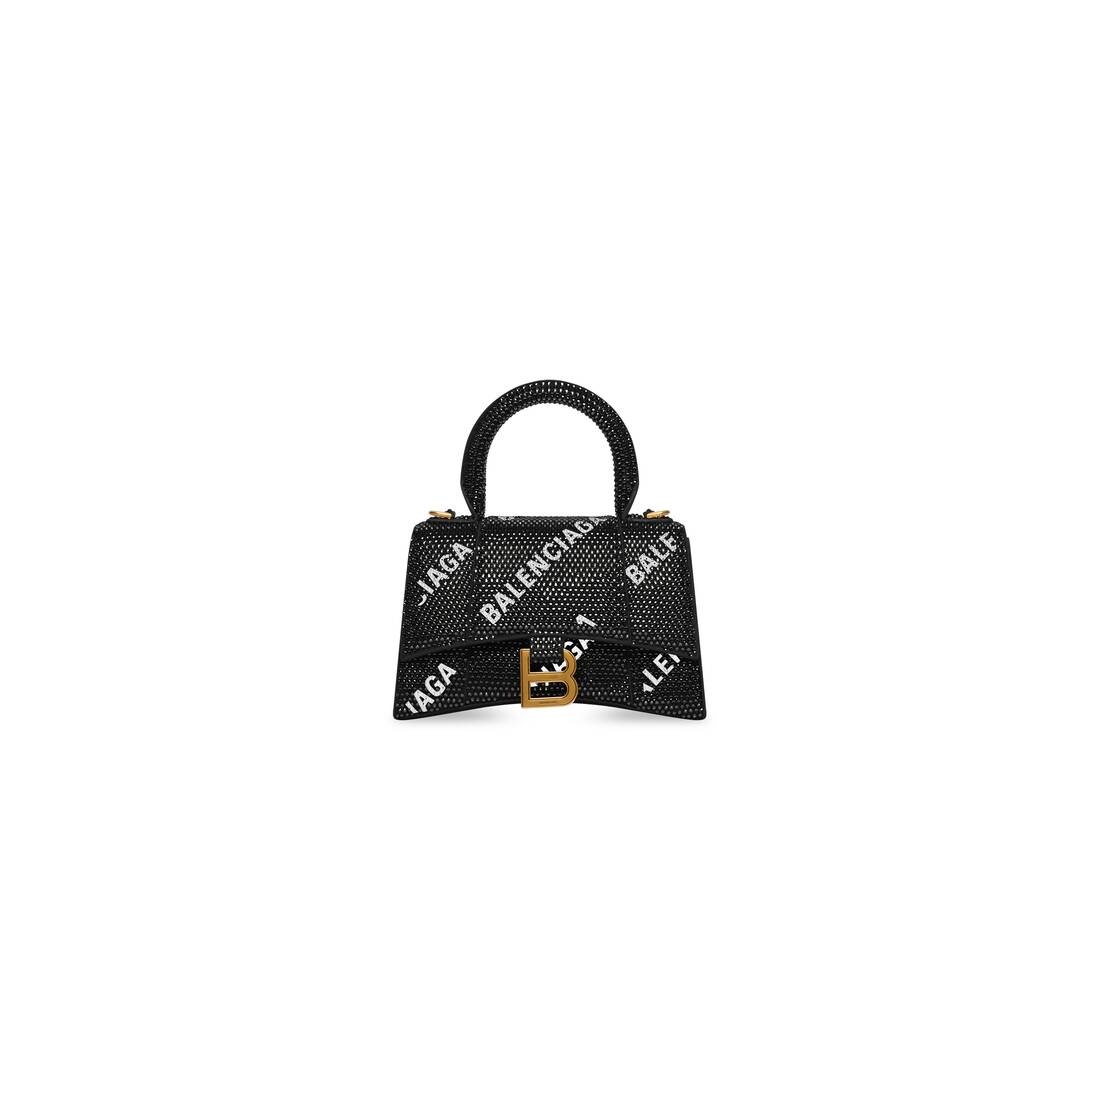 Gold Hourglass XS crystal-embellished handbag, Balenciaga